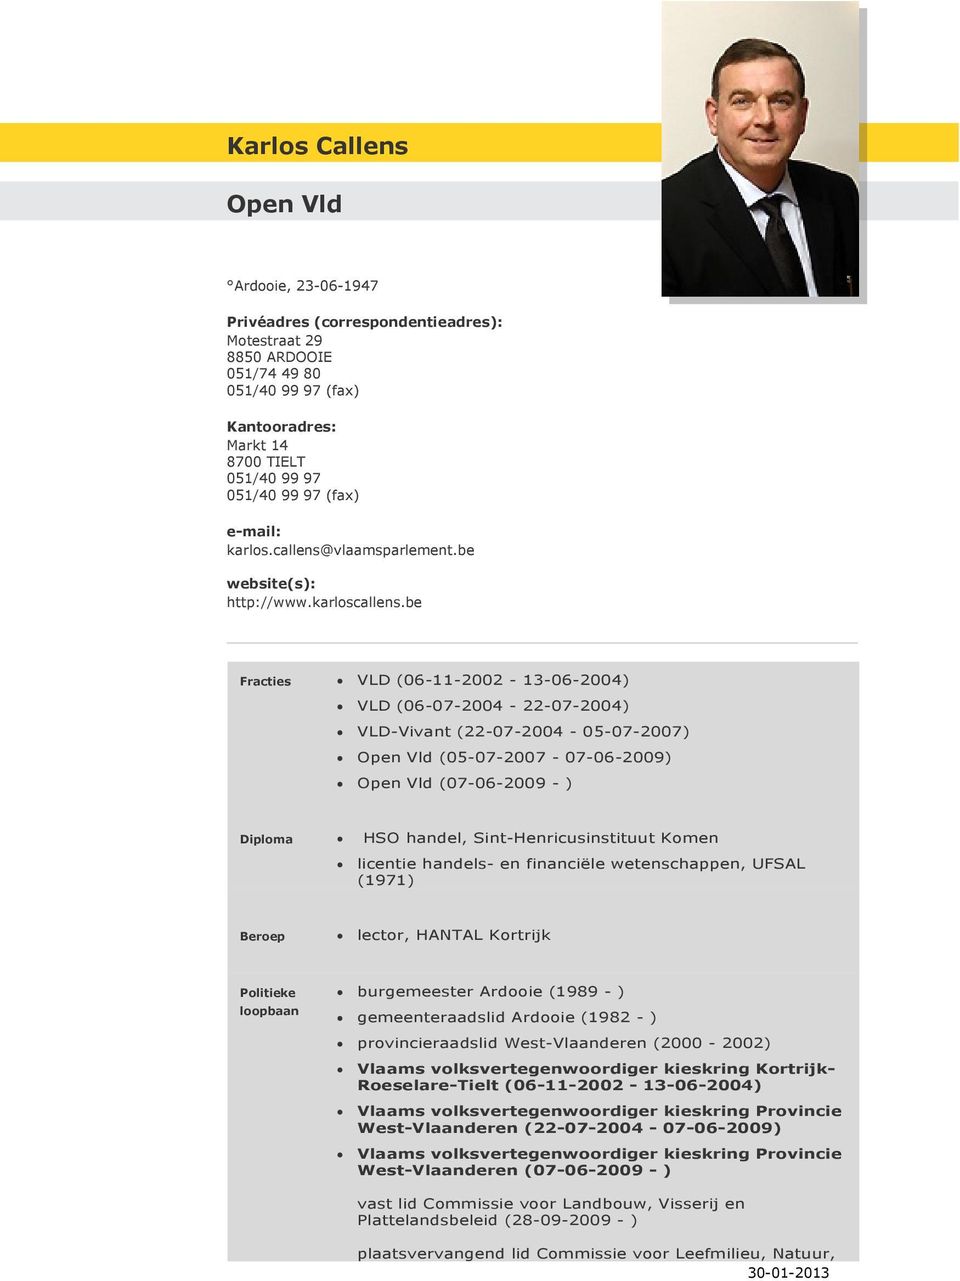 be VLD (06-11-2002-13-06-2004) VLD (06-07-2004-22-07-2004) VLD-Vivant (22-07-2004-05-07-2007) Open Vld (05-07-2007-07-06-2009) Open Vld (07-06-2009 - ) HSO handel, Sint-Henricusinstituut Komen